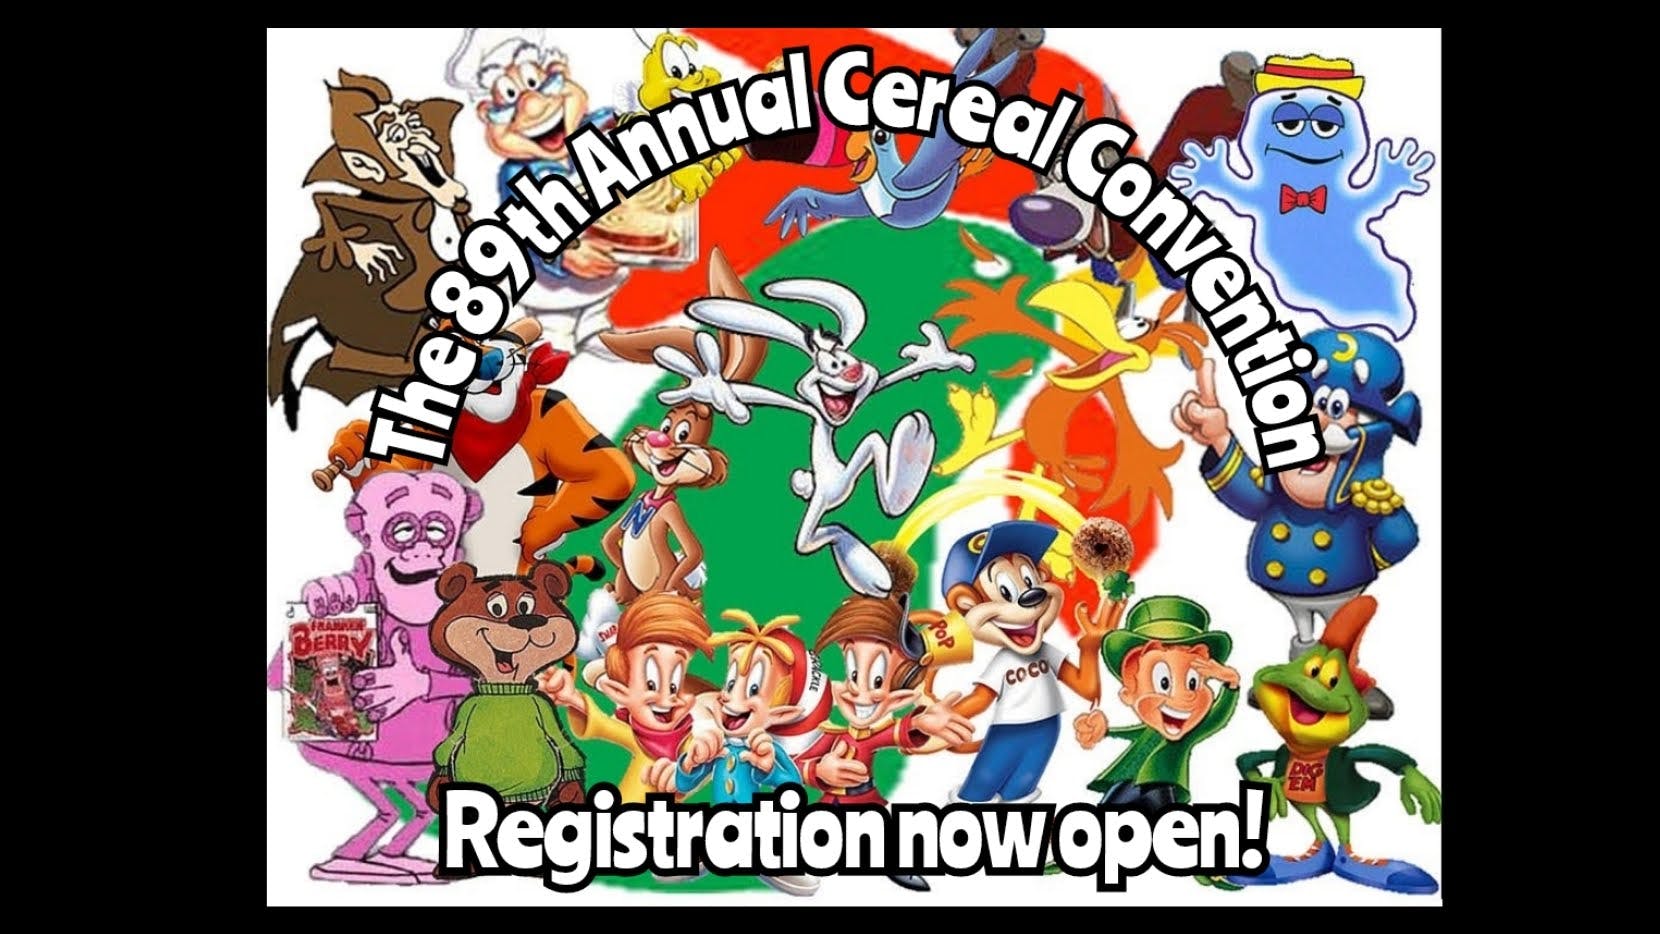 Cereal Mascot Convention, a D&D 5e mini-campaign